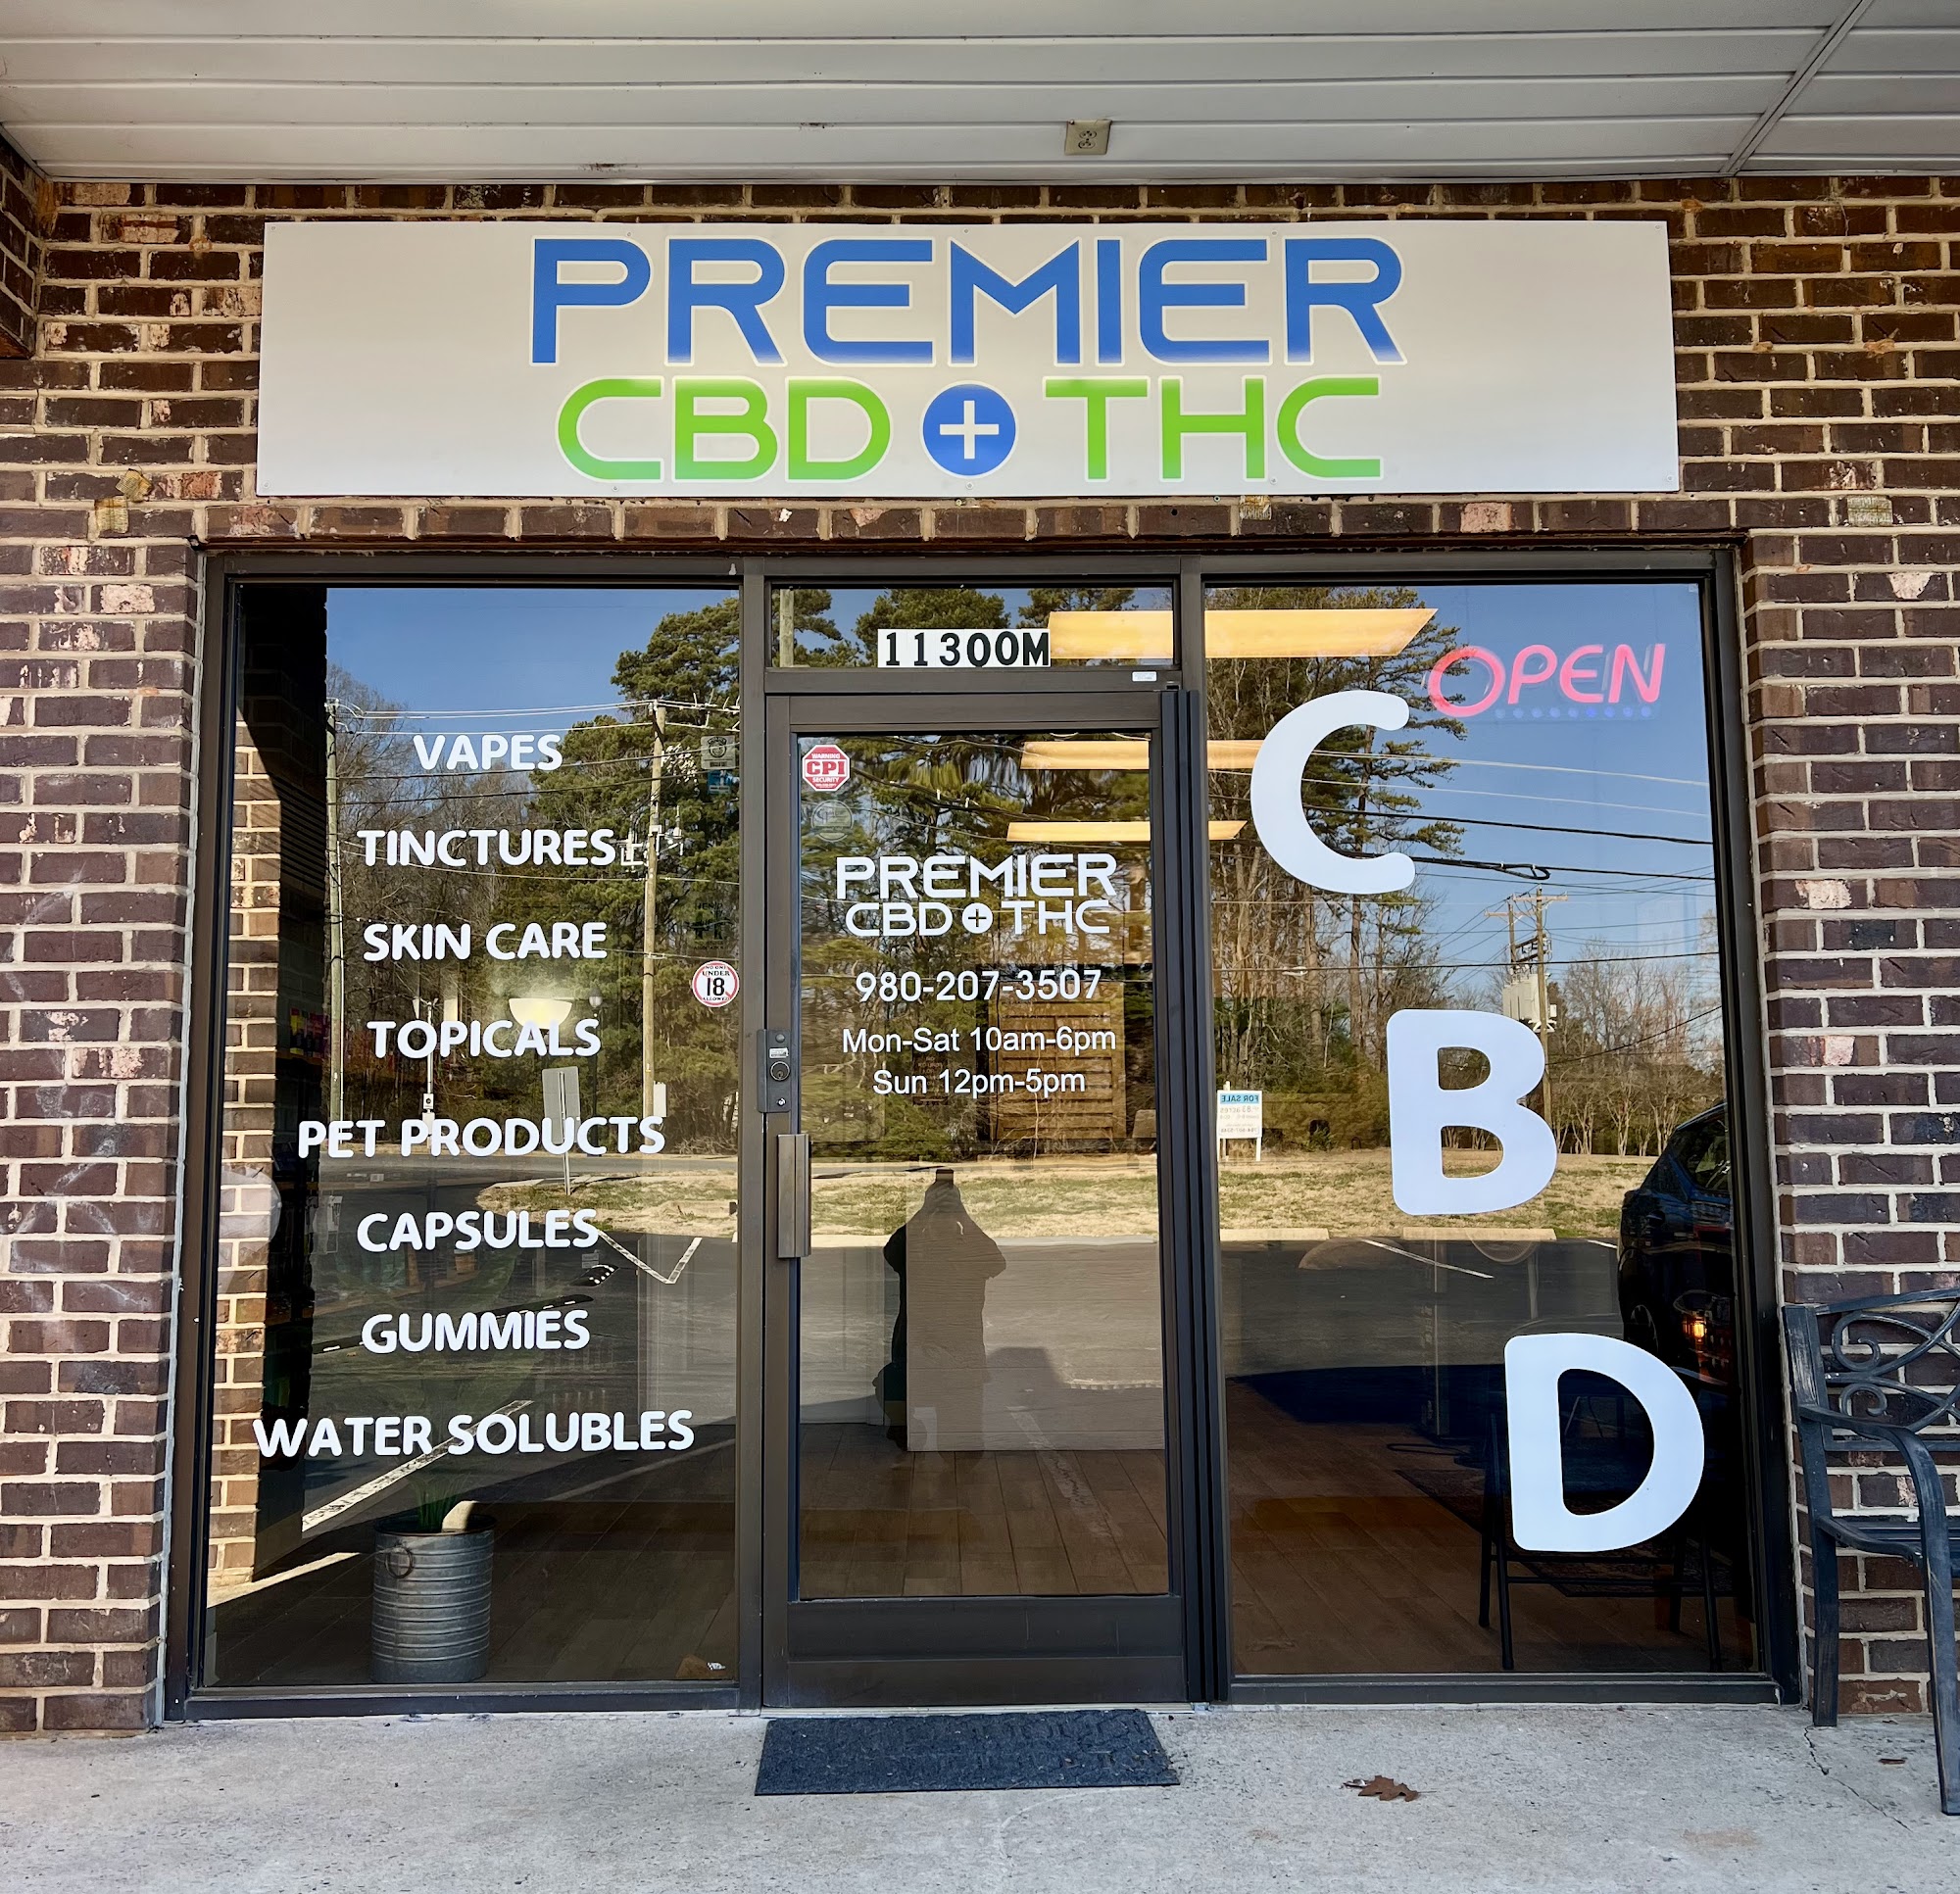 Premier CBD+THC